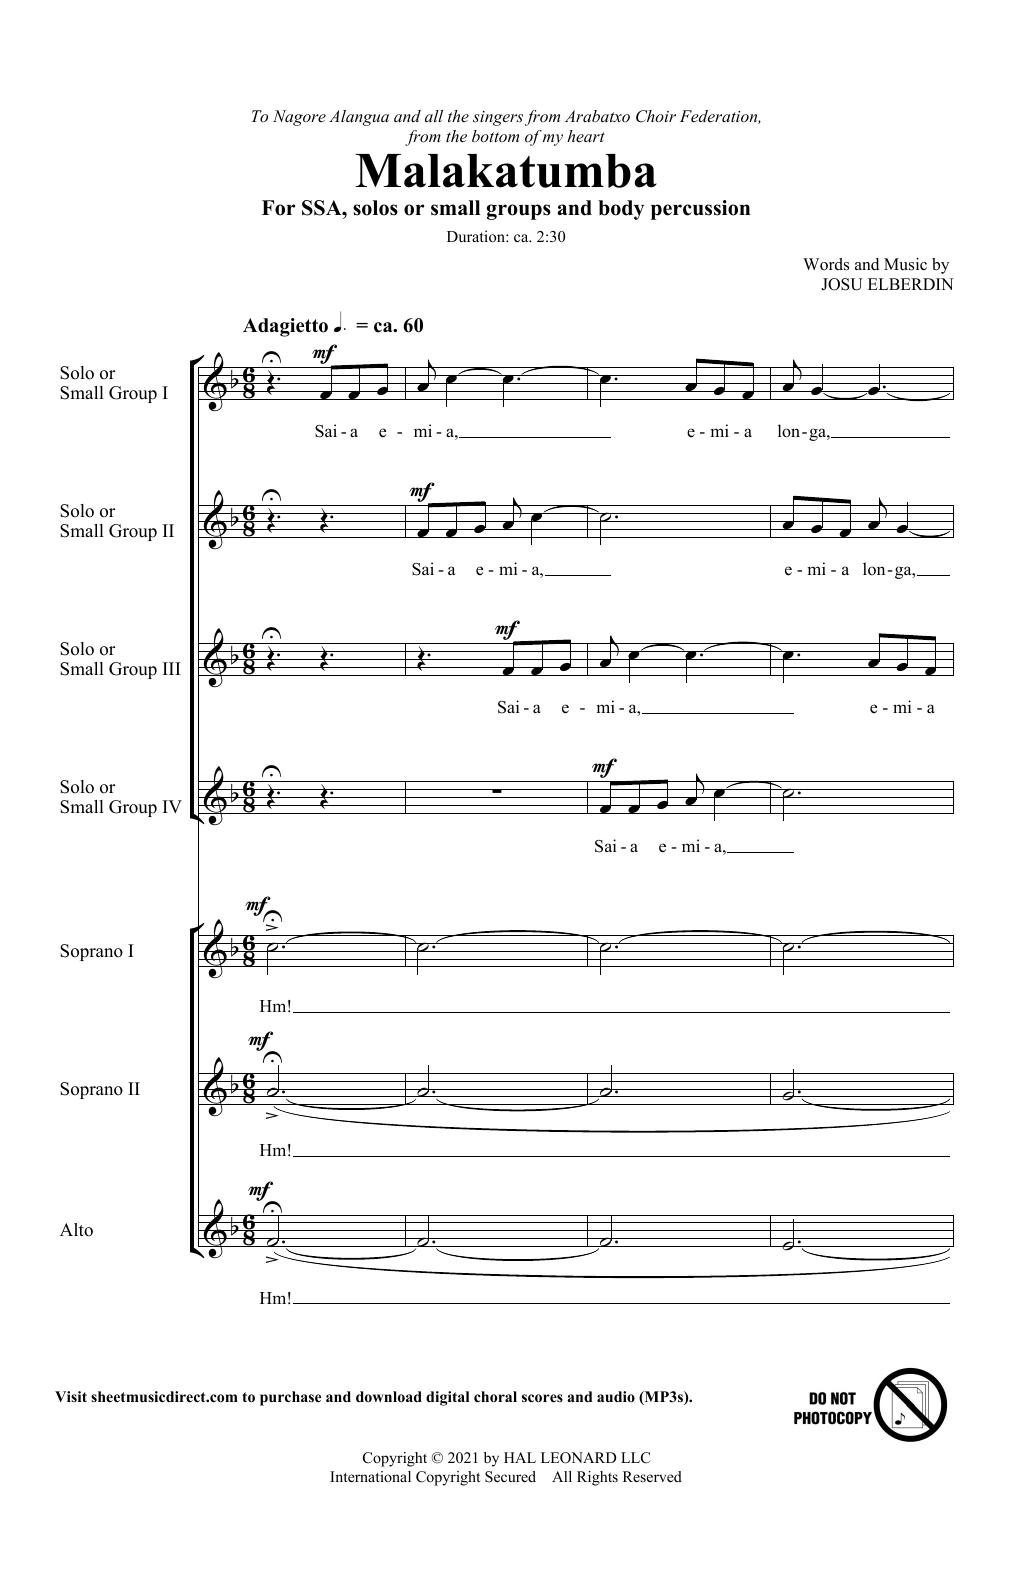 Download Josu Elberdin Malakatumba Sheet Music and learn how to play SAB Choir PDF digital score in minutes